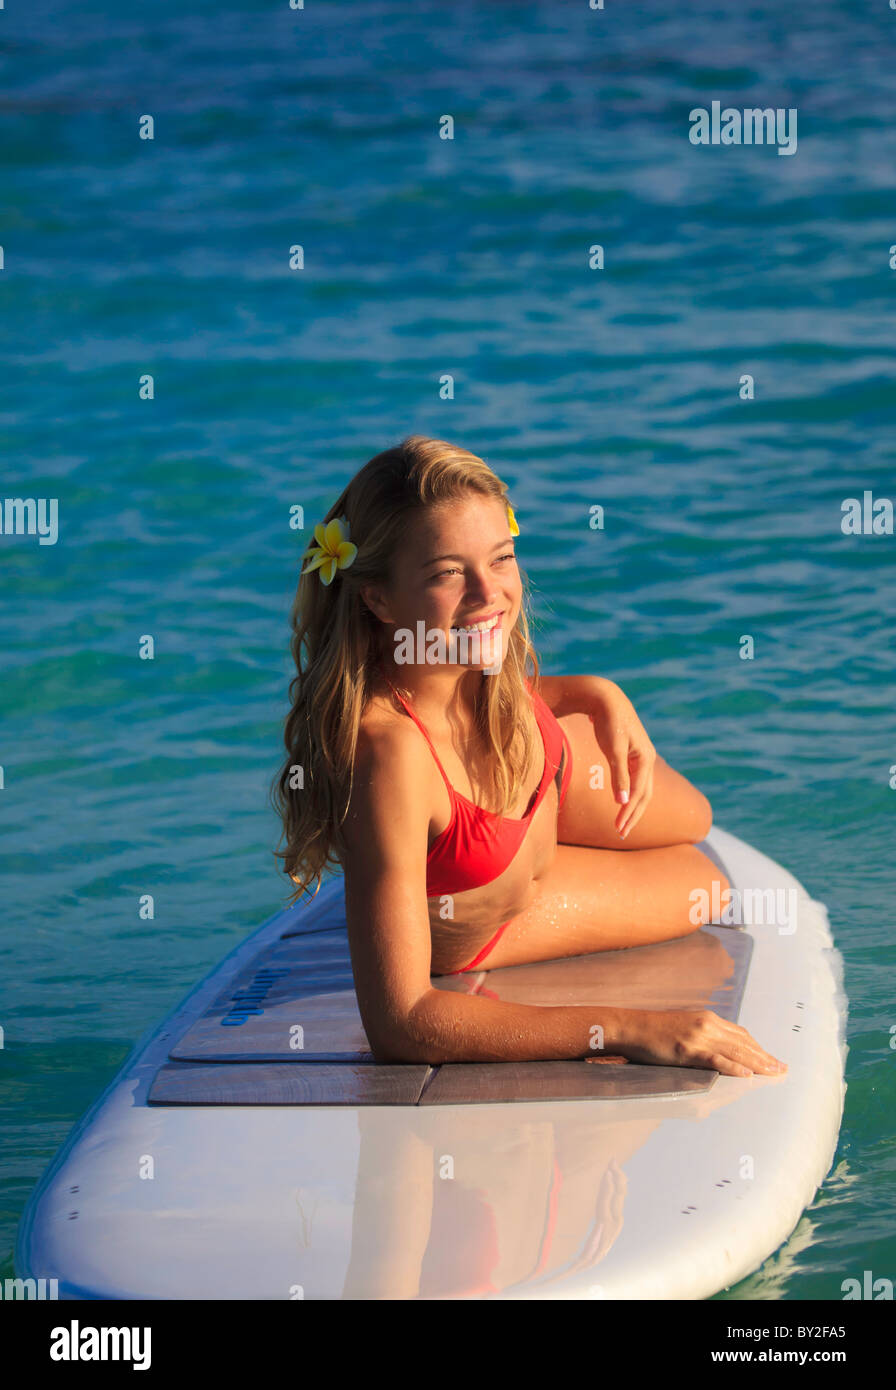 Teenager-Mädchen im roten Bikini am Stand up Paddle Board im Ozean in hawaii Stockfoto